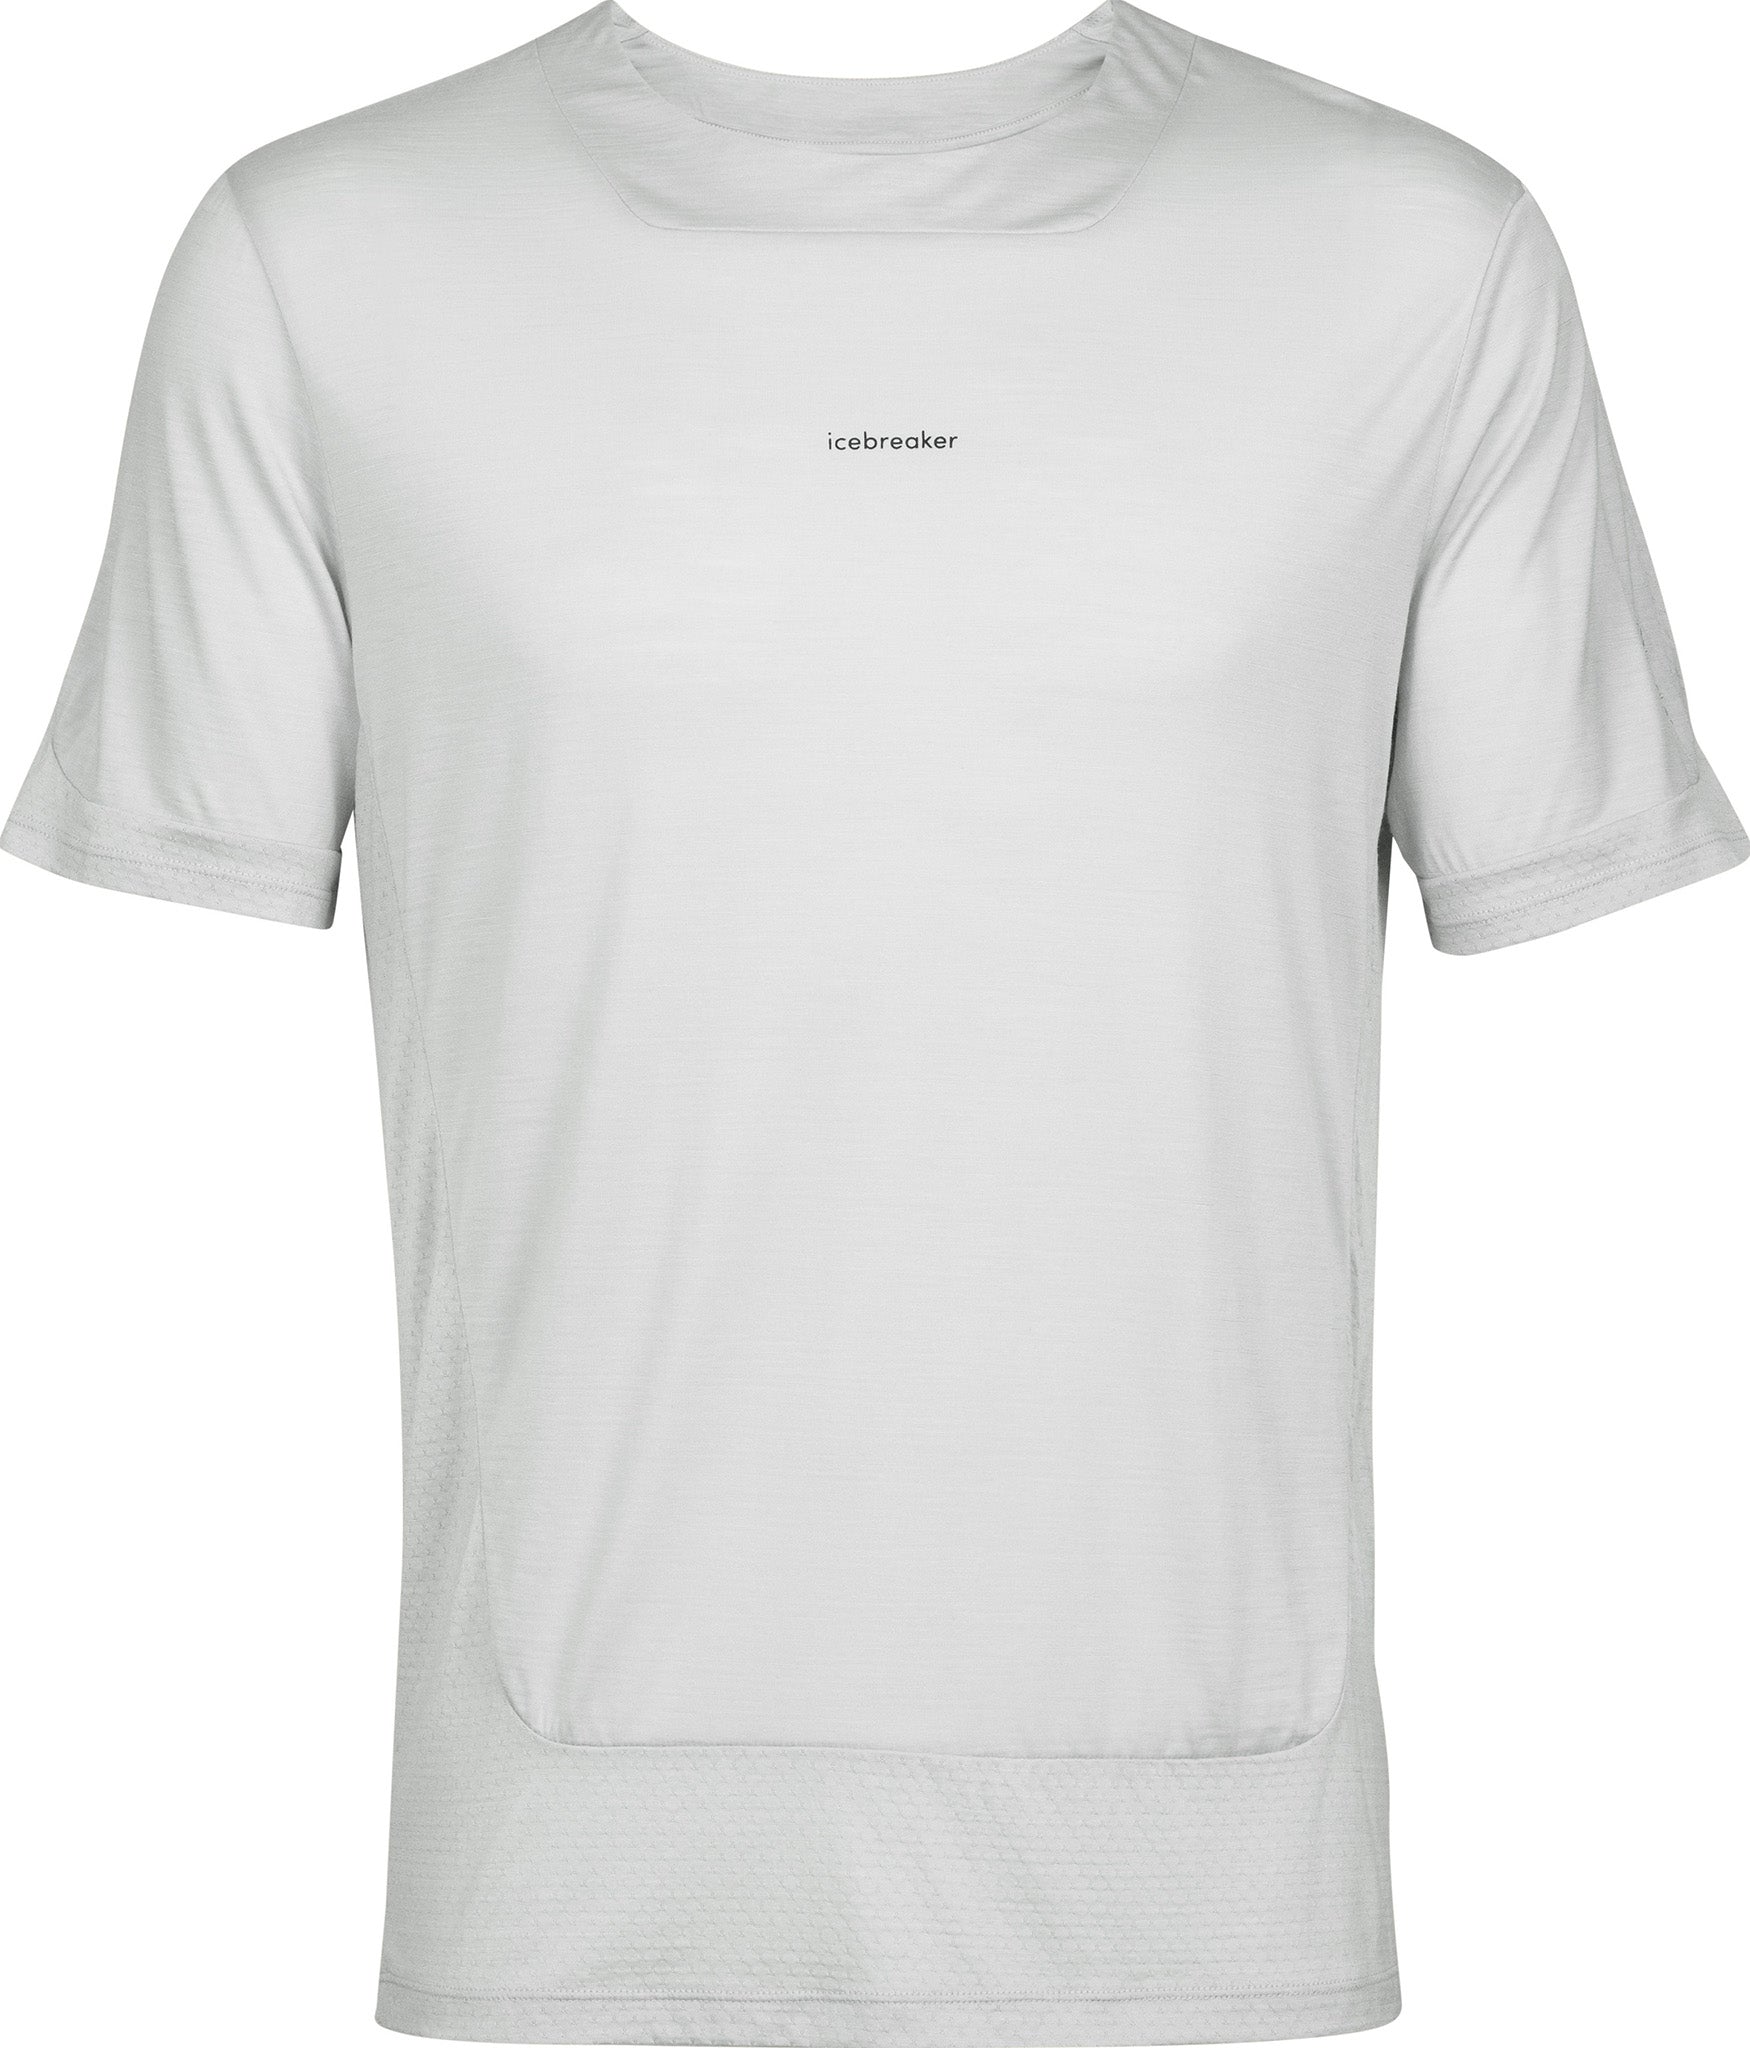 Icebreaker ZoneKnit T-Shirt - Men's